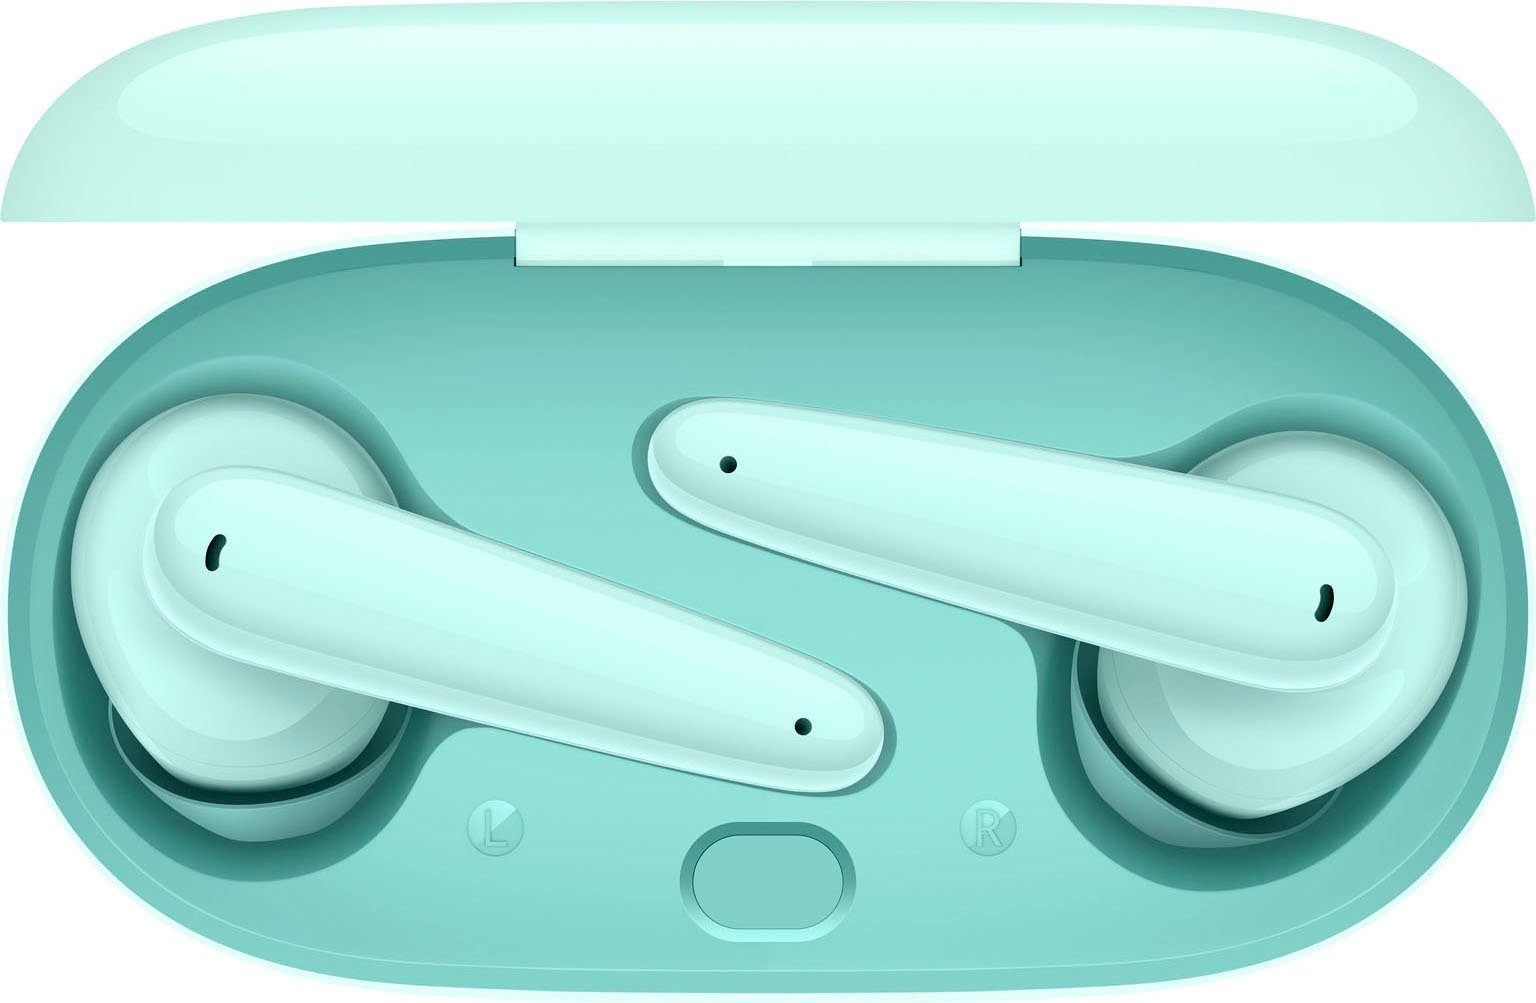 Kristallklarer wireless Huawei SE Akkulaufzeit) Blau Sound, (Premium-Design, In-Ear-Kopfhörer FreeBuds Lange